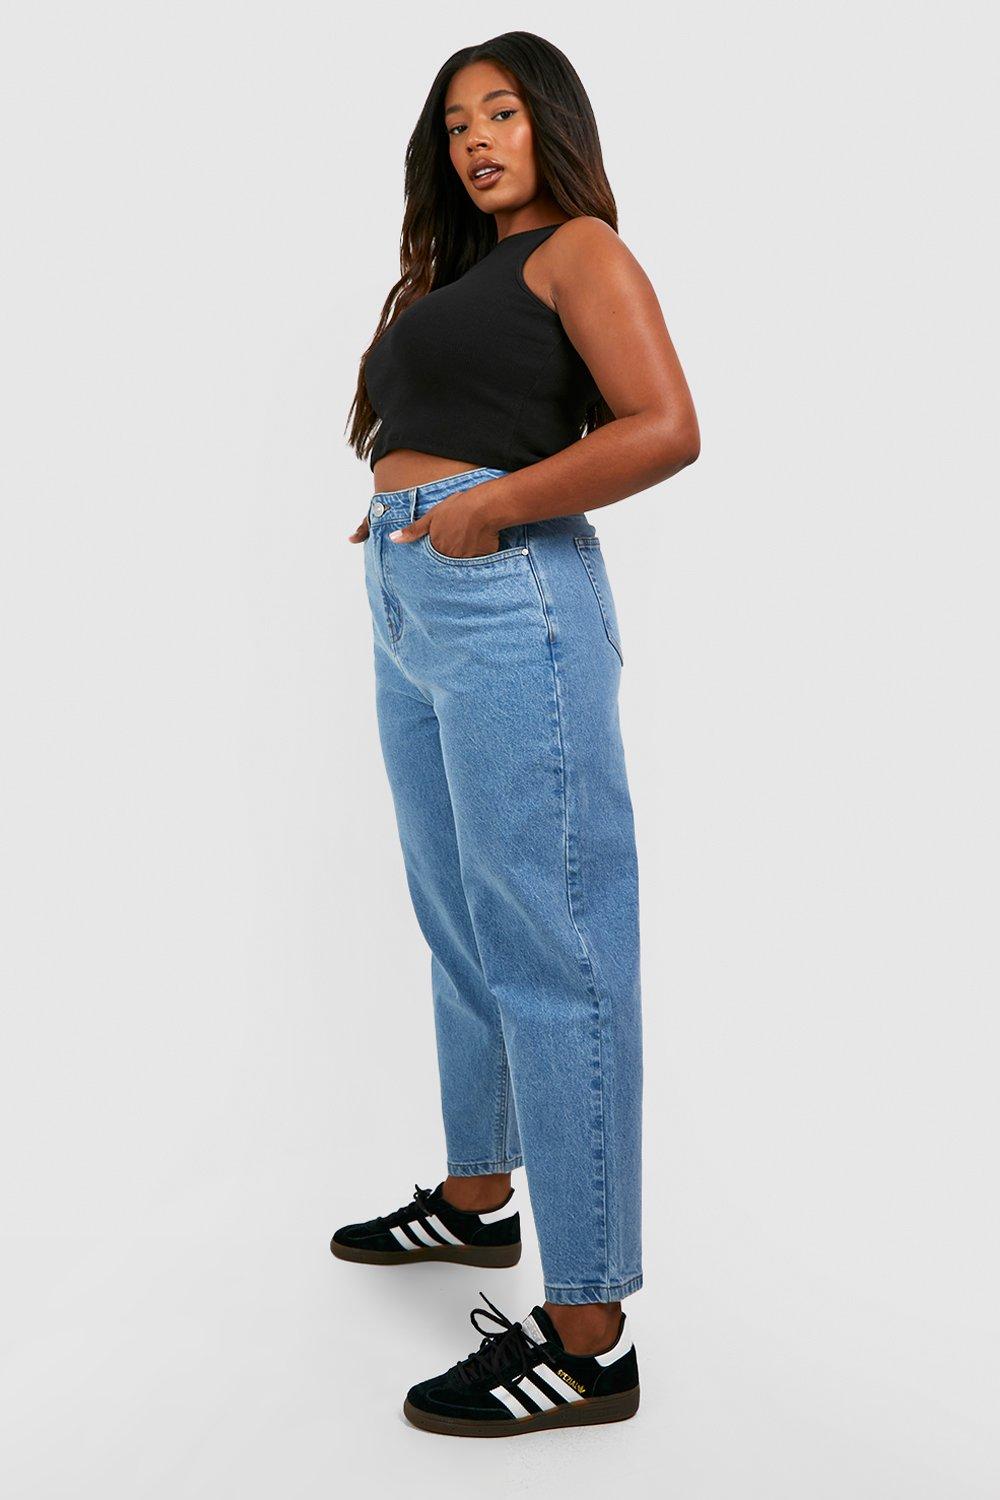 BOOHOO ladies Womens Denim Blue Turn Up Mom Jeans Plus Size 16 18 20 22 24